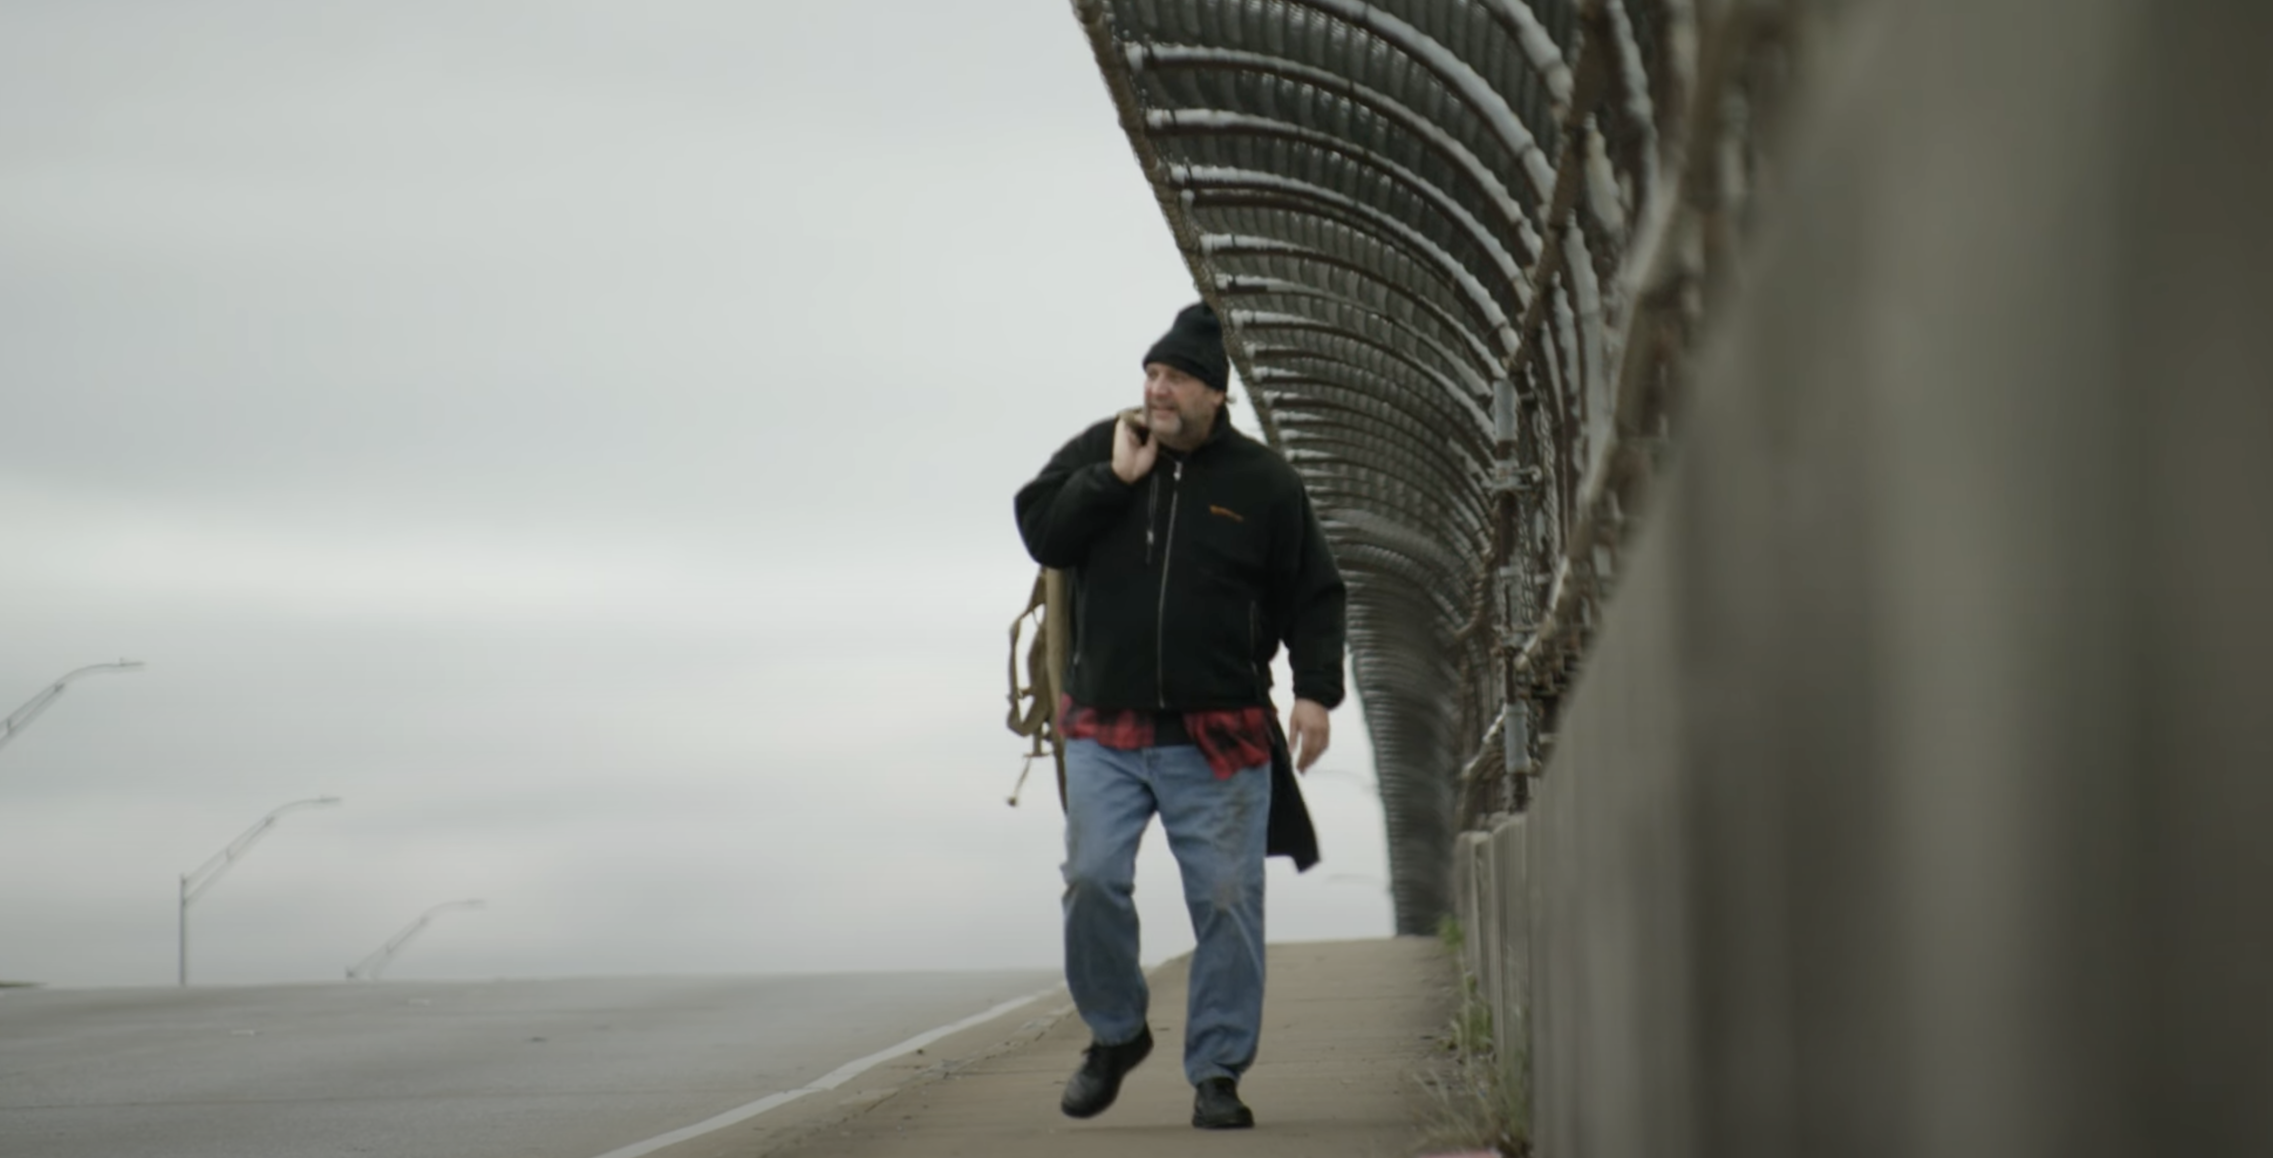 person experiencing homelessness walking along bridge